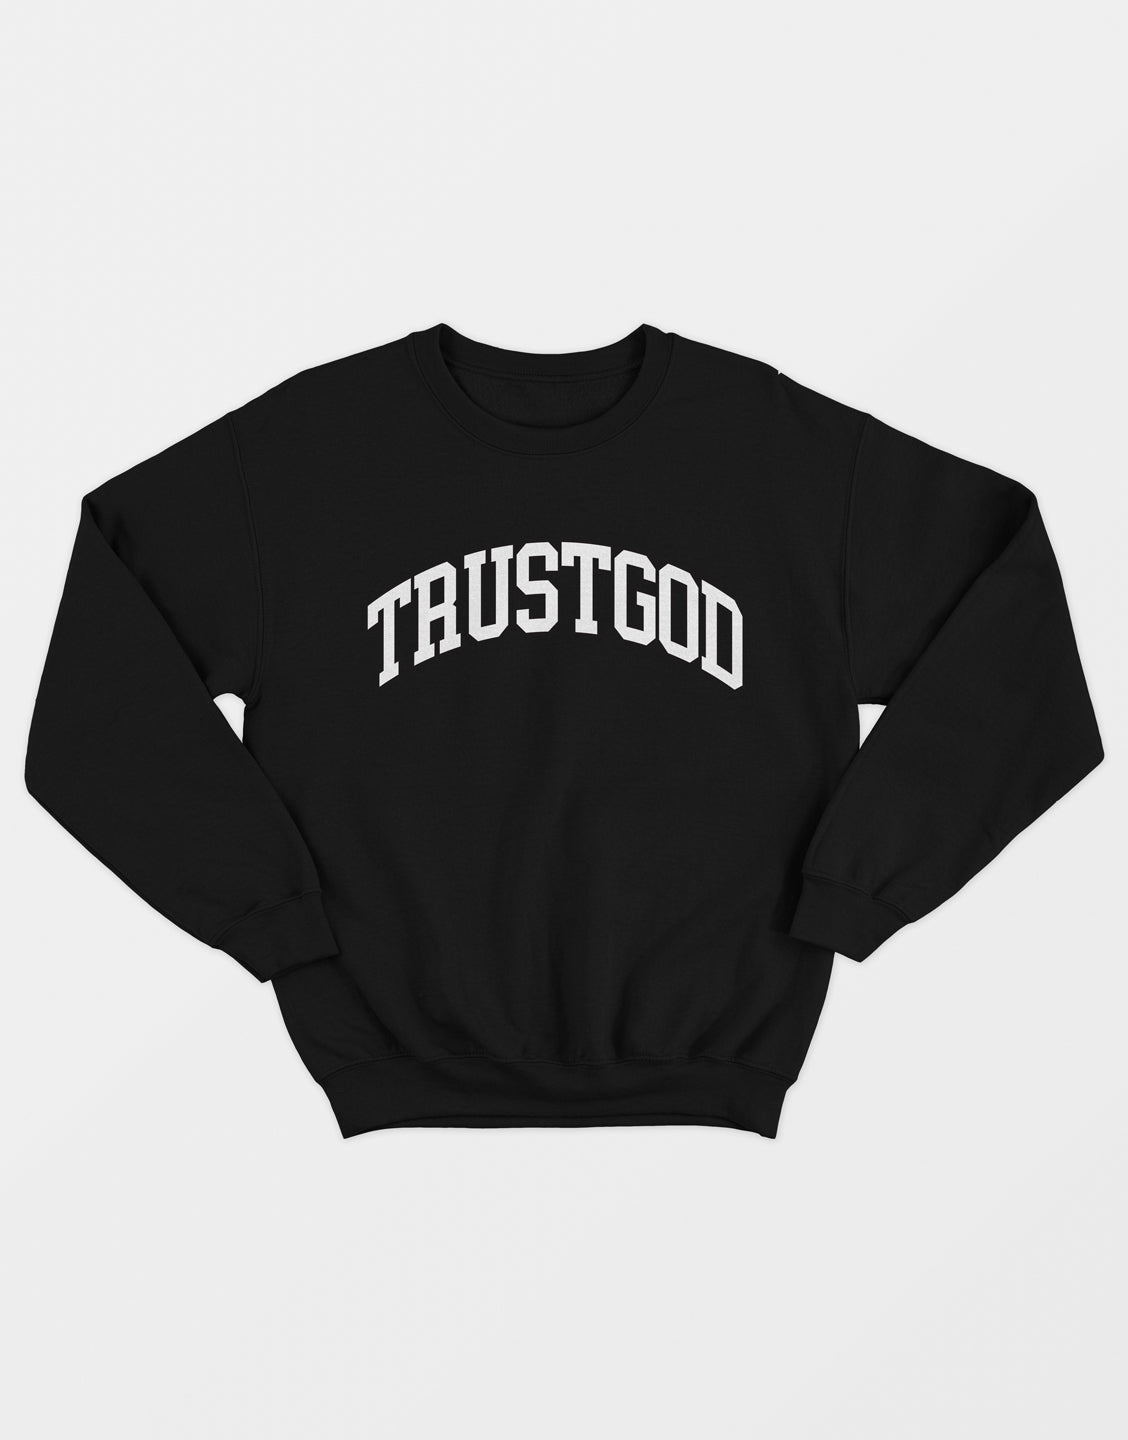 Trust God Sweatshirts - VOTC Clothing